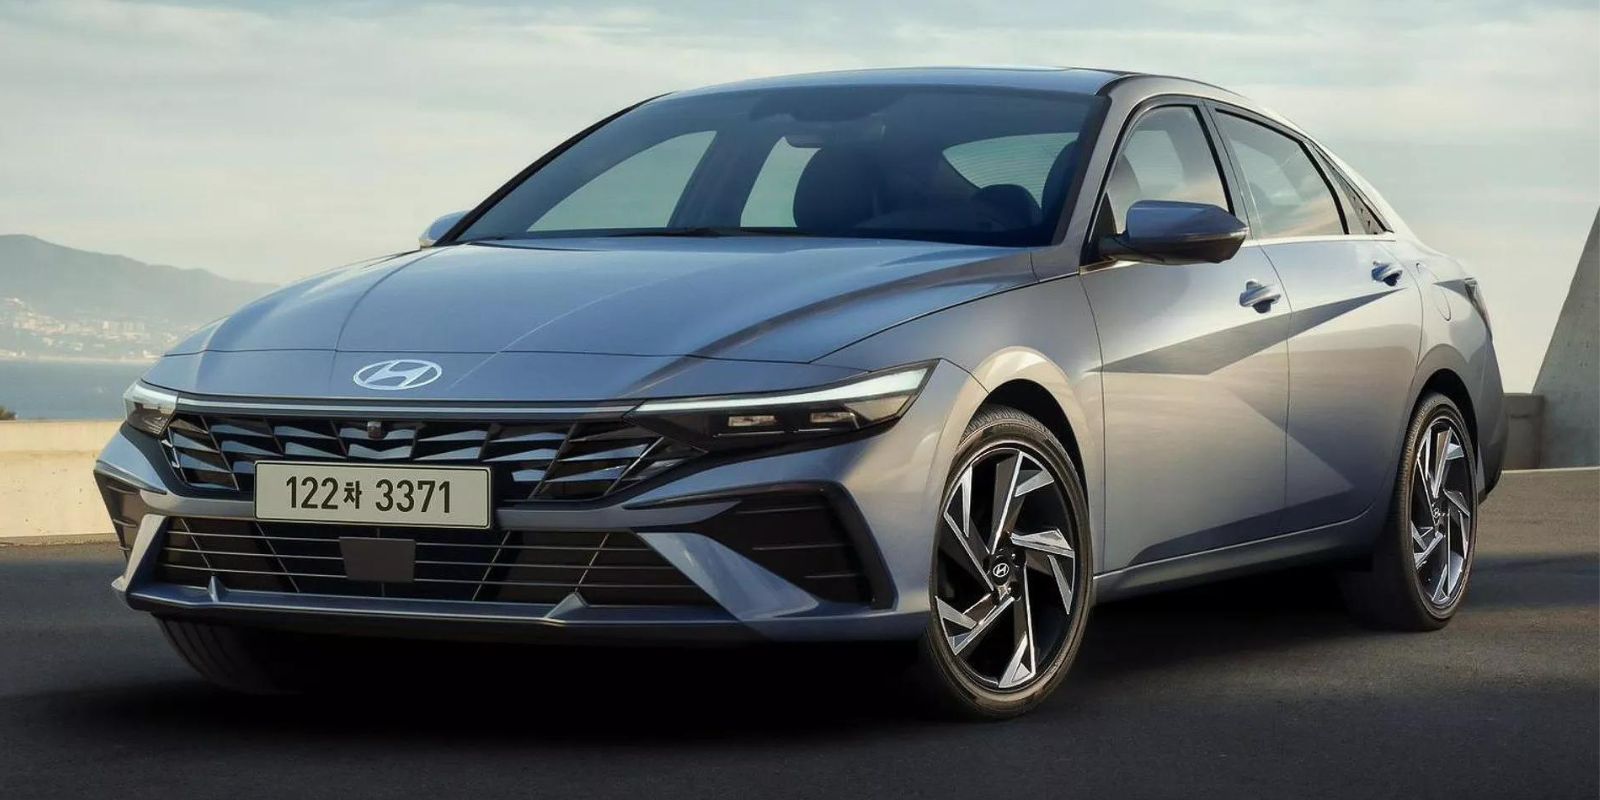 2023 Hyundai Elantra Revealed, Gets An Updated Design